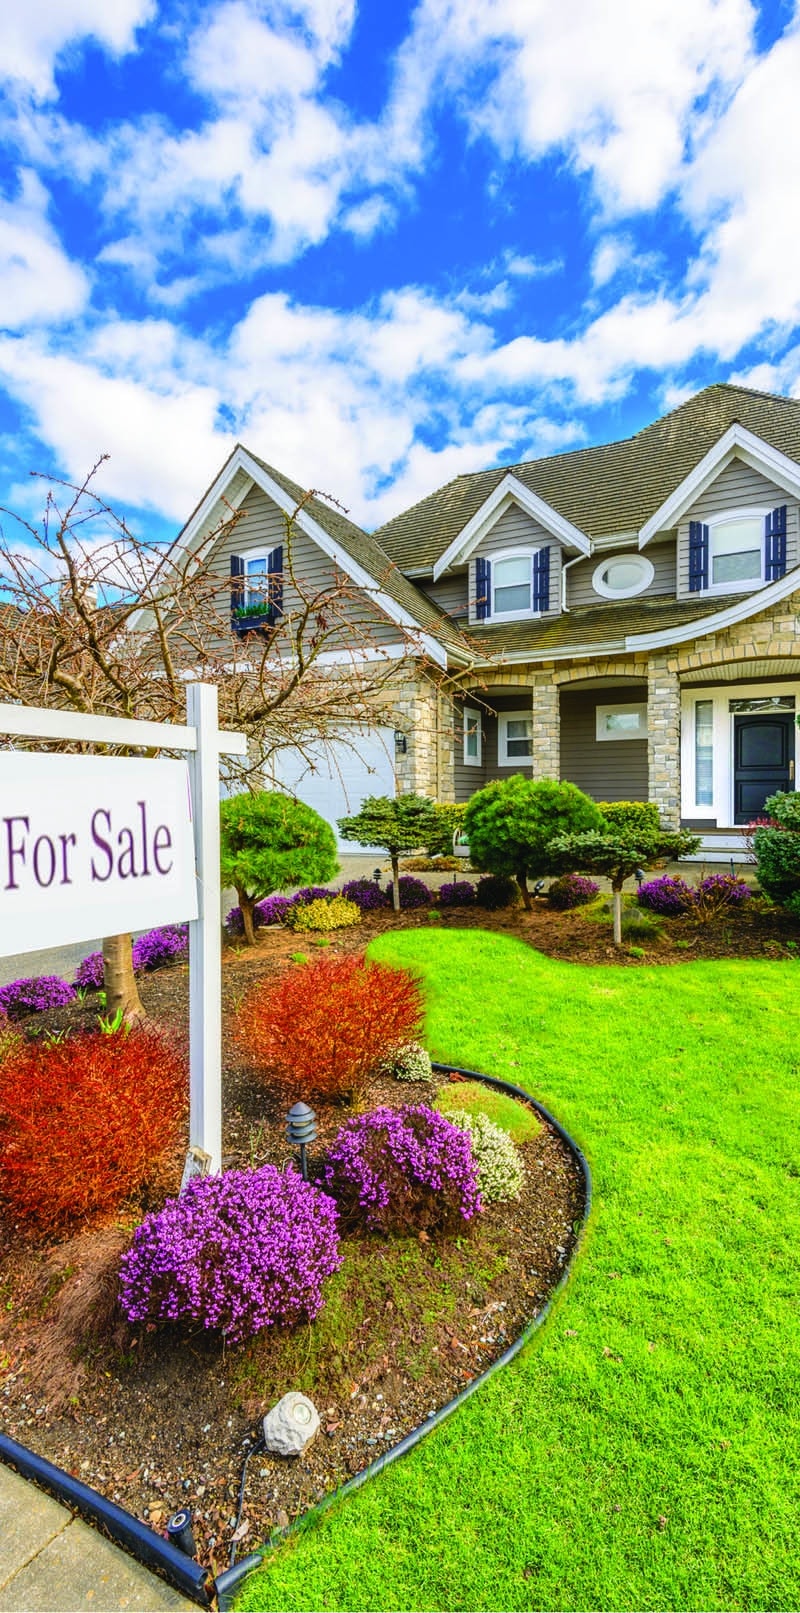 5-16 Home_Buy Sell_web2